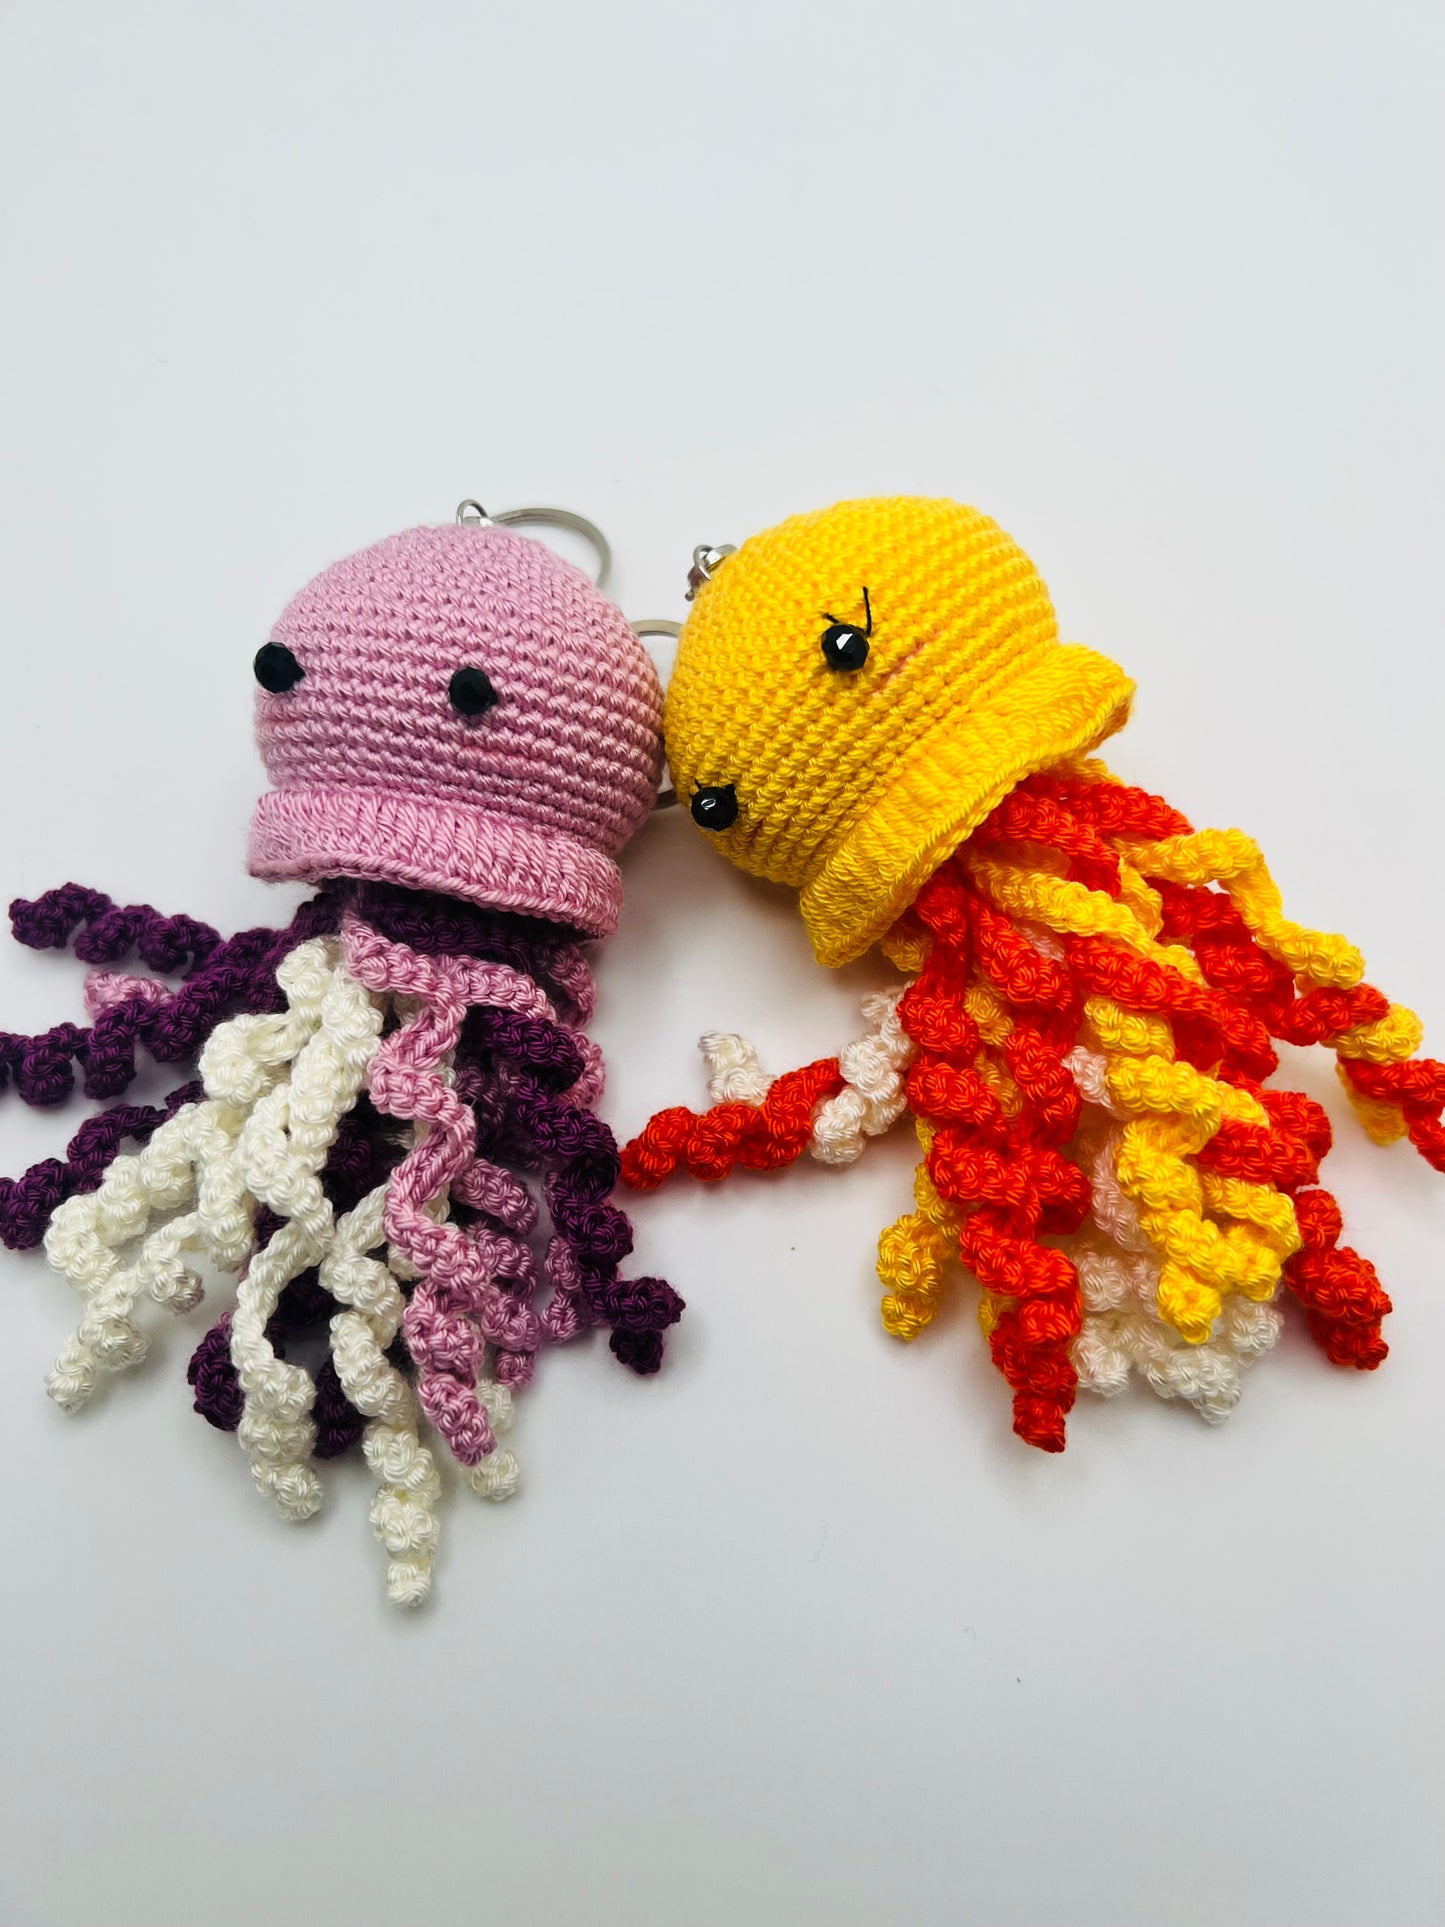 Stuffed Jellyfish Keychain Toy - (Purple & Yellow) - Crochet Knitted Amigurumi Toy